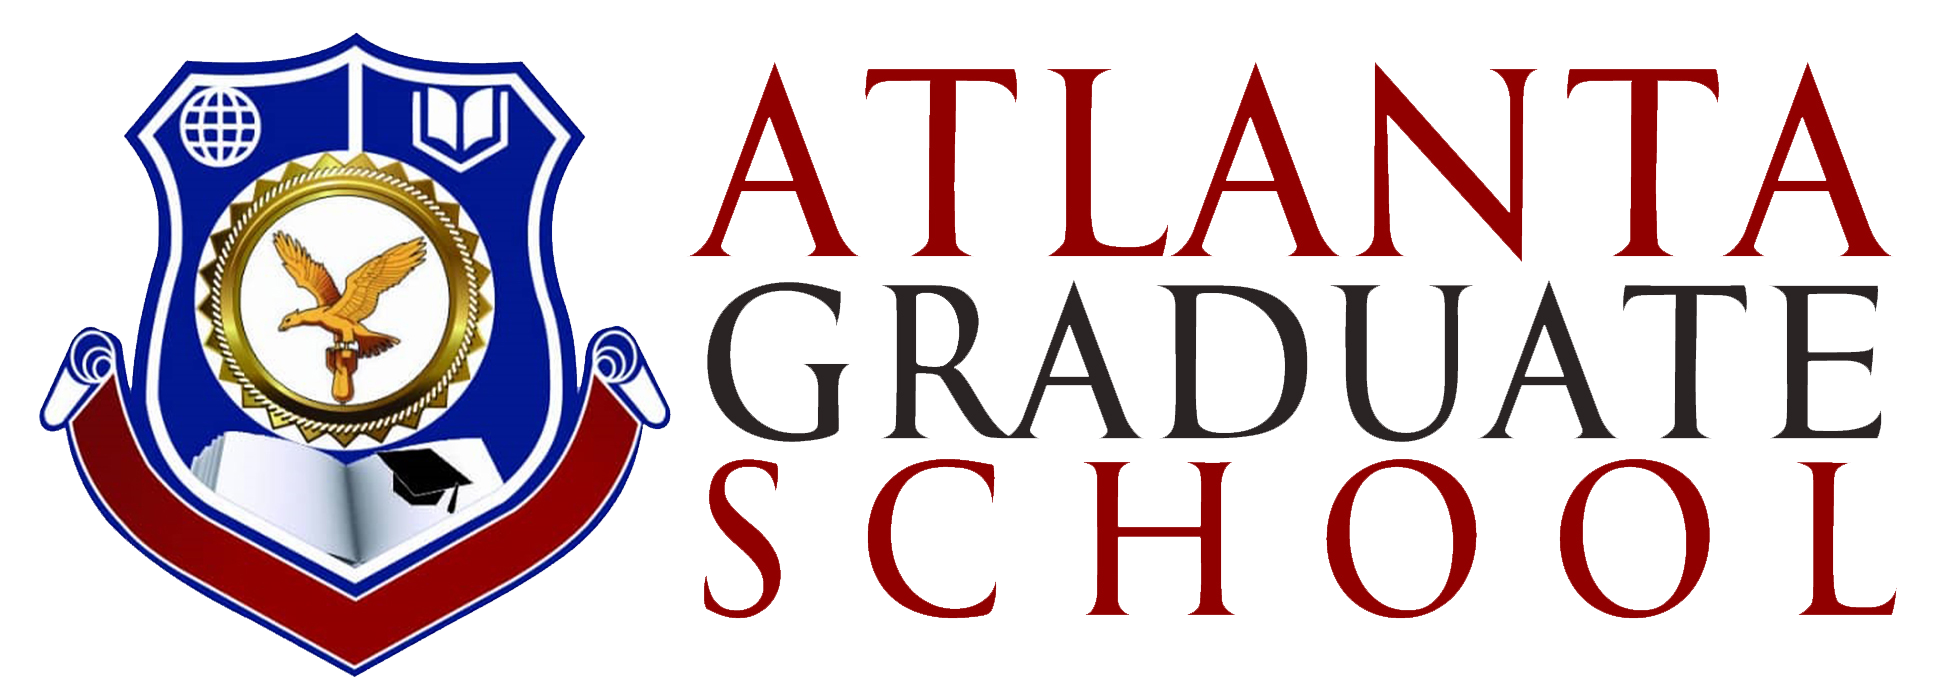 Atlanta Graduate School.com - Promoting a Technology-Based Global Economy through Education